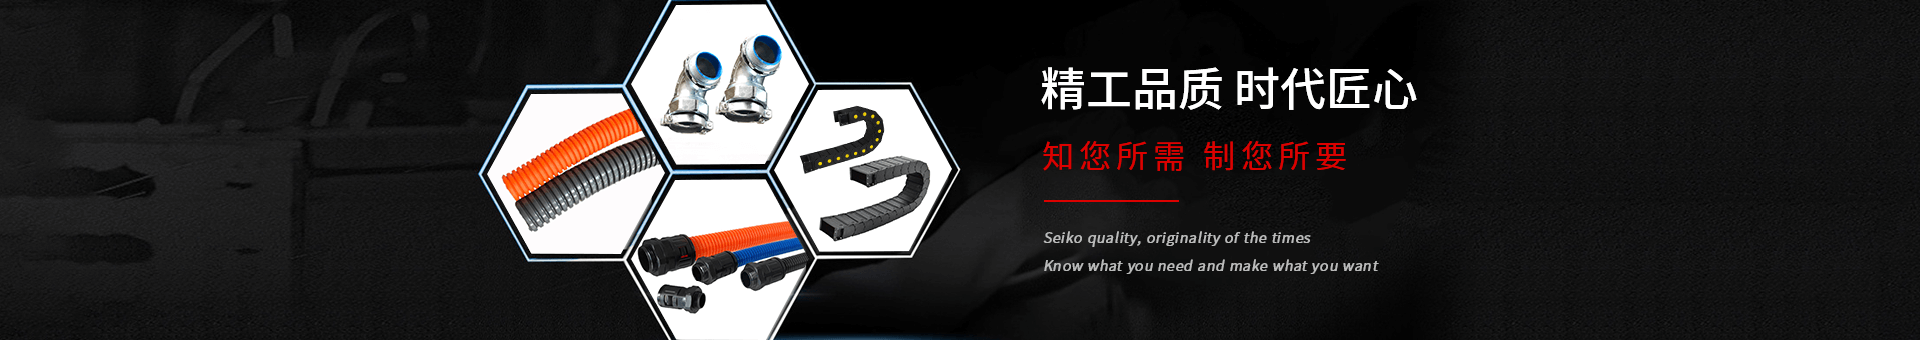 NBA下注官网 - nba中国官方网站机械banner